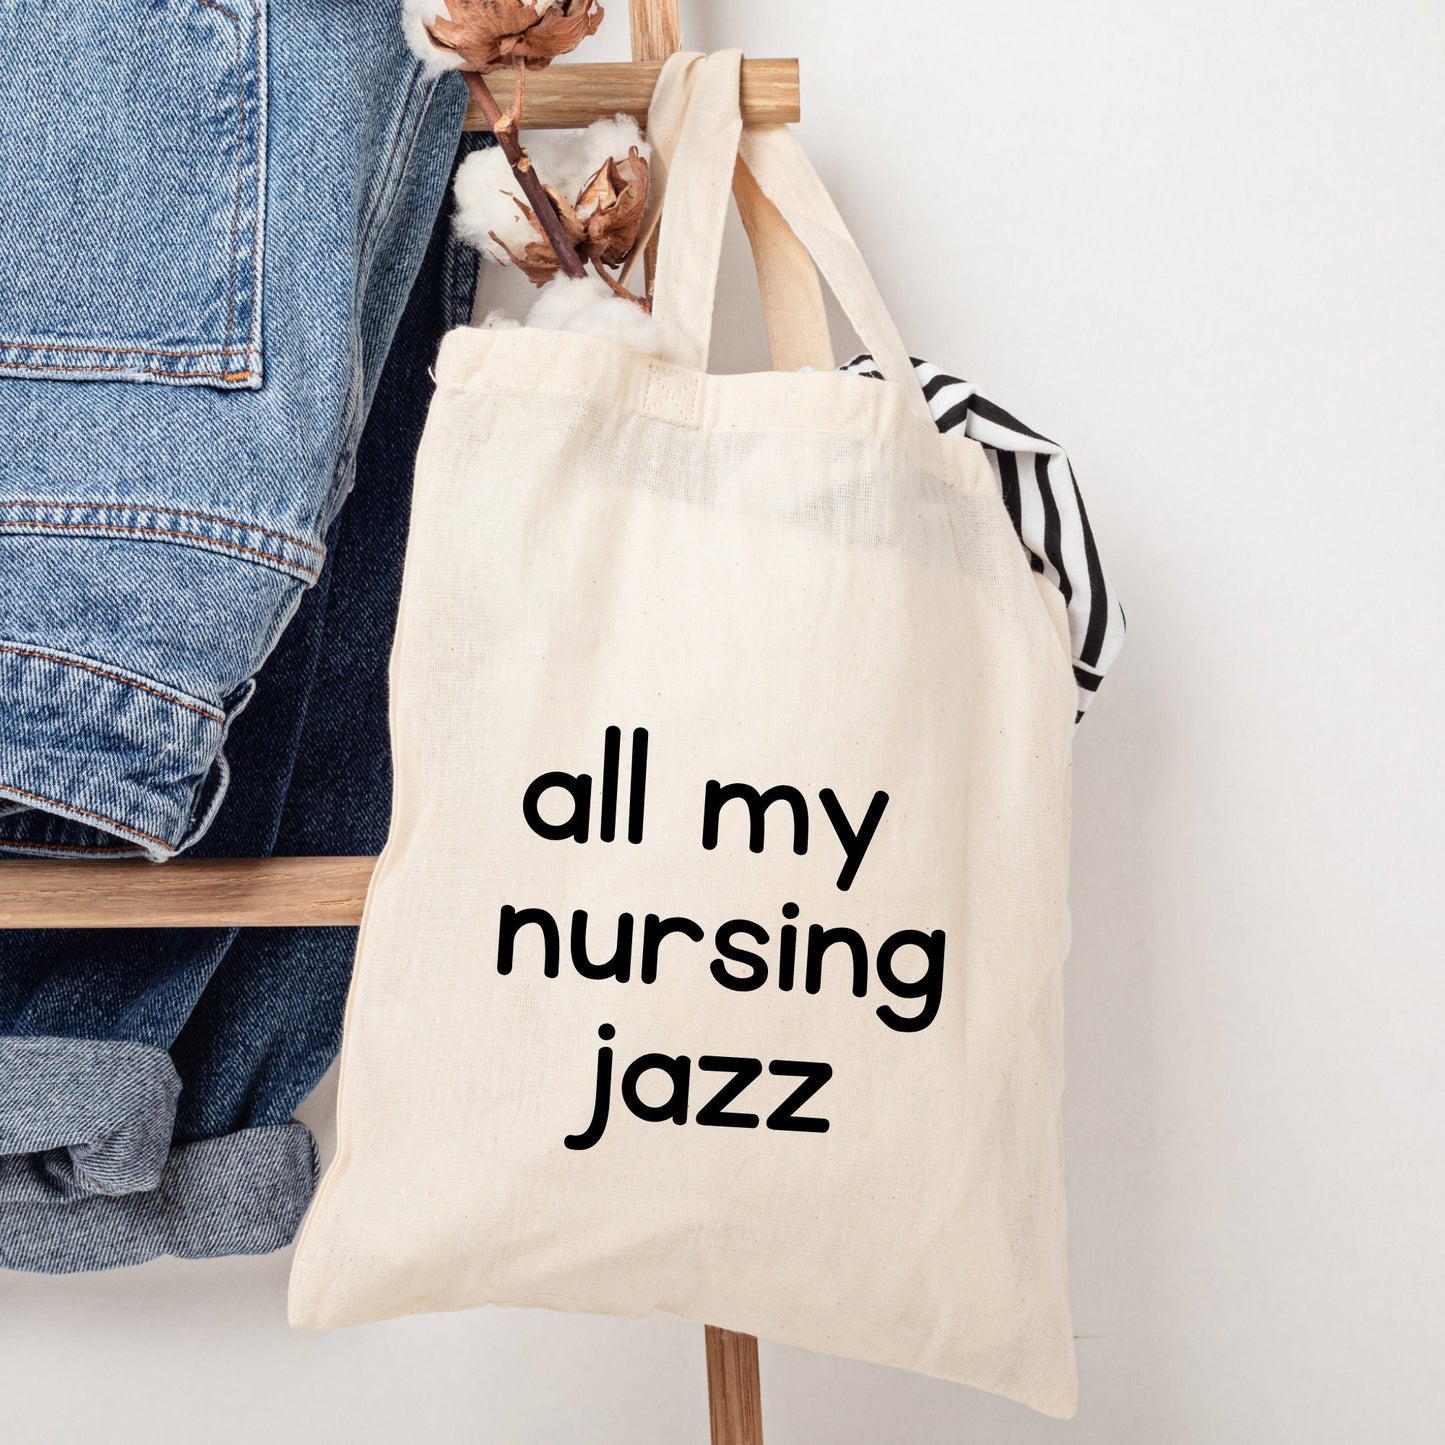 Nurse tote bag, all my nursing jazz work bag, congrats first nursing job gift, nhs nurse gift, nurse colleague leaving gift